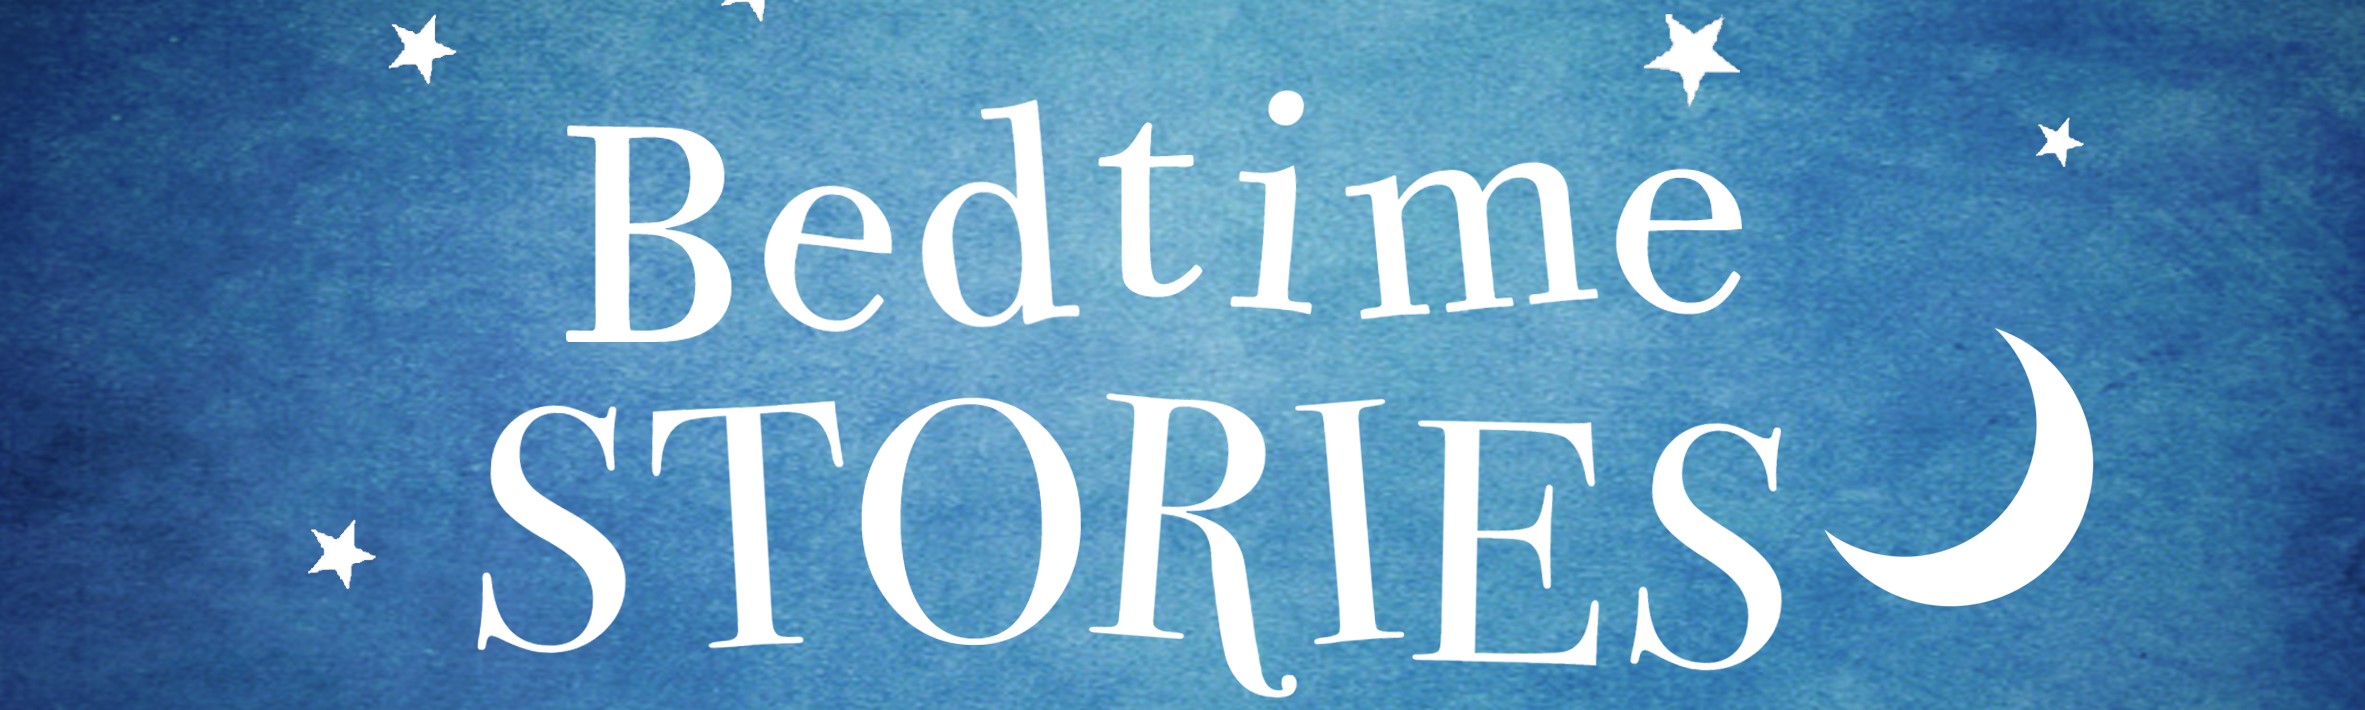 Authors’ Week Bedtime Stories